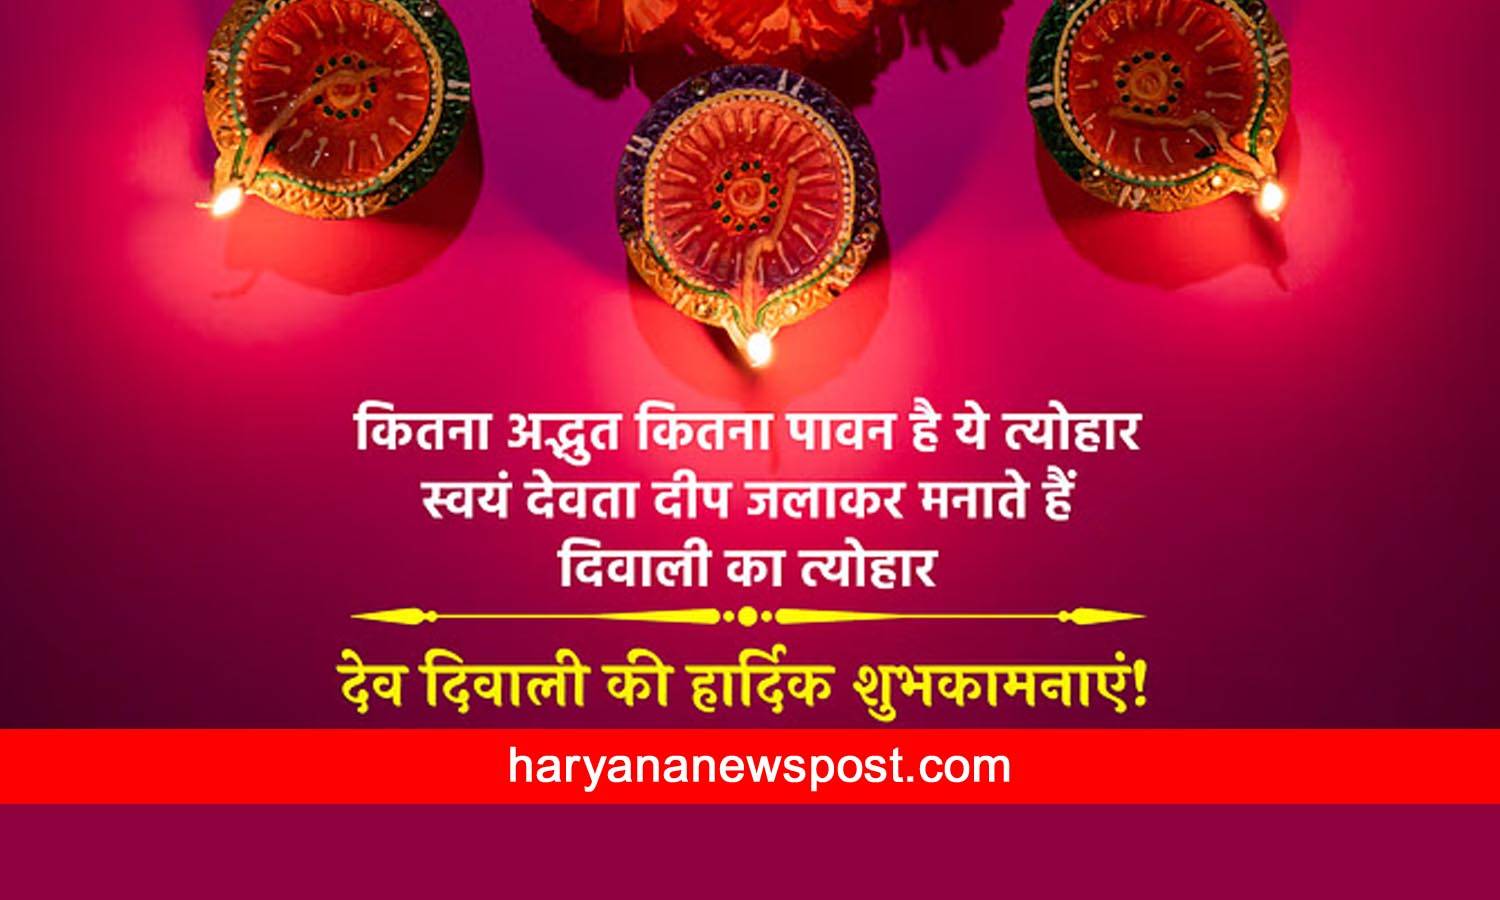 Happy Dev Deepawali Wishes Images In Hindi